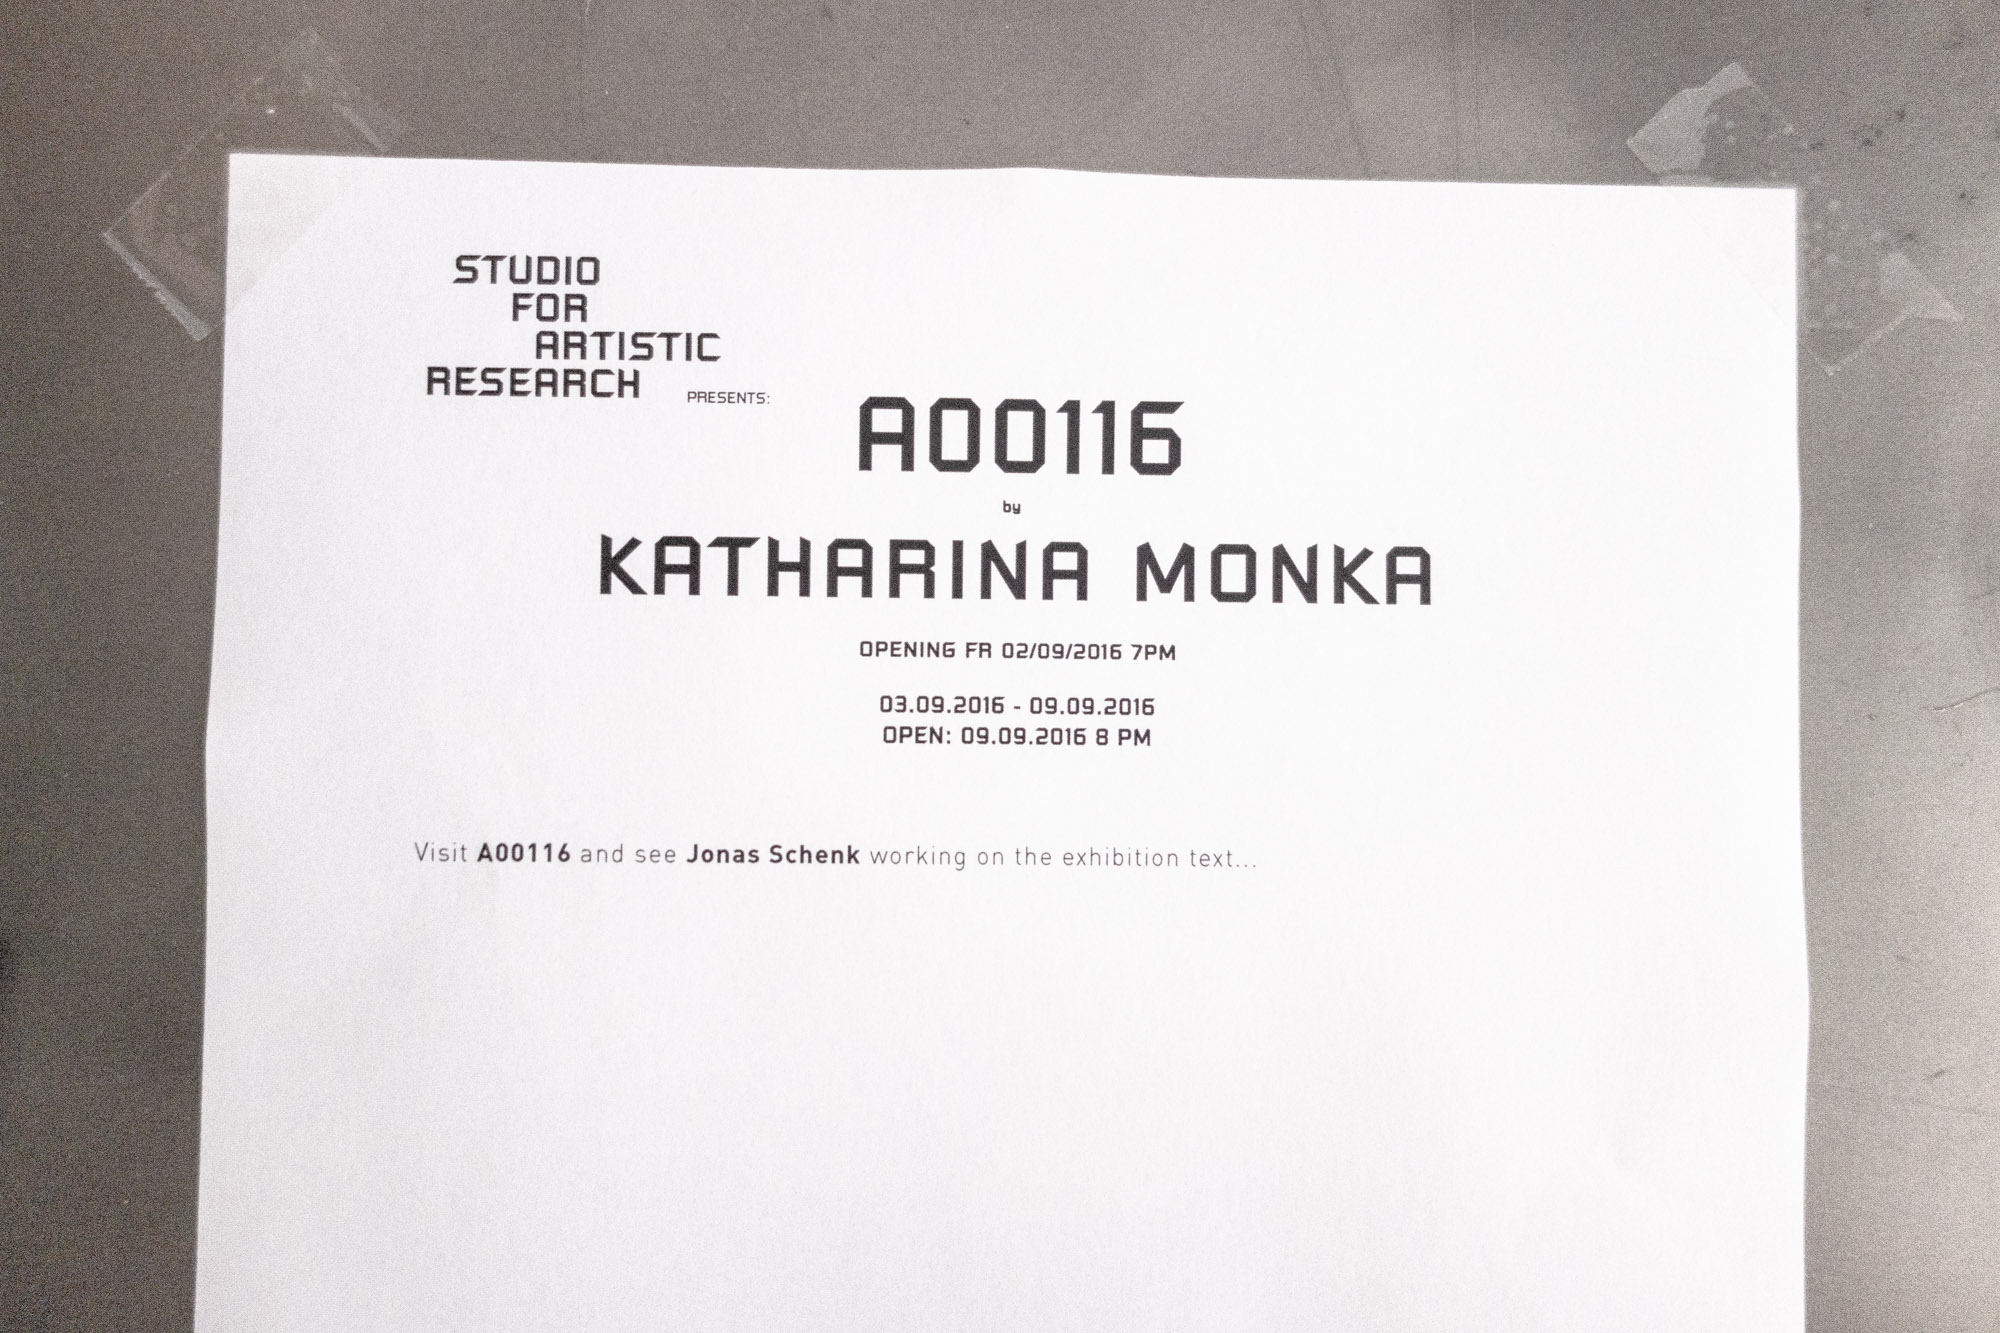 A00116 - Katharina Monka - Installation view - 02.09.2016 Studio For Artistic Research Katharina Monka Düsseldorf